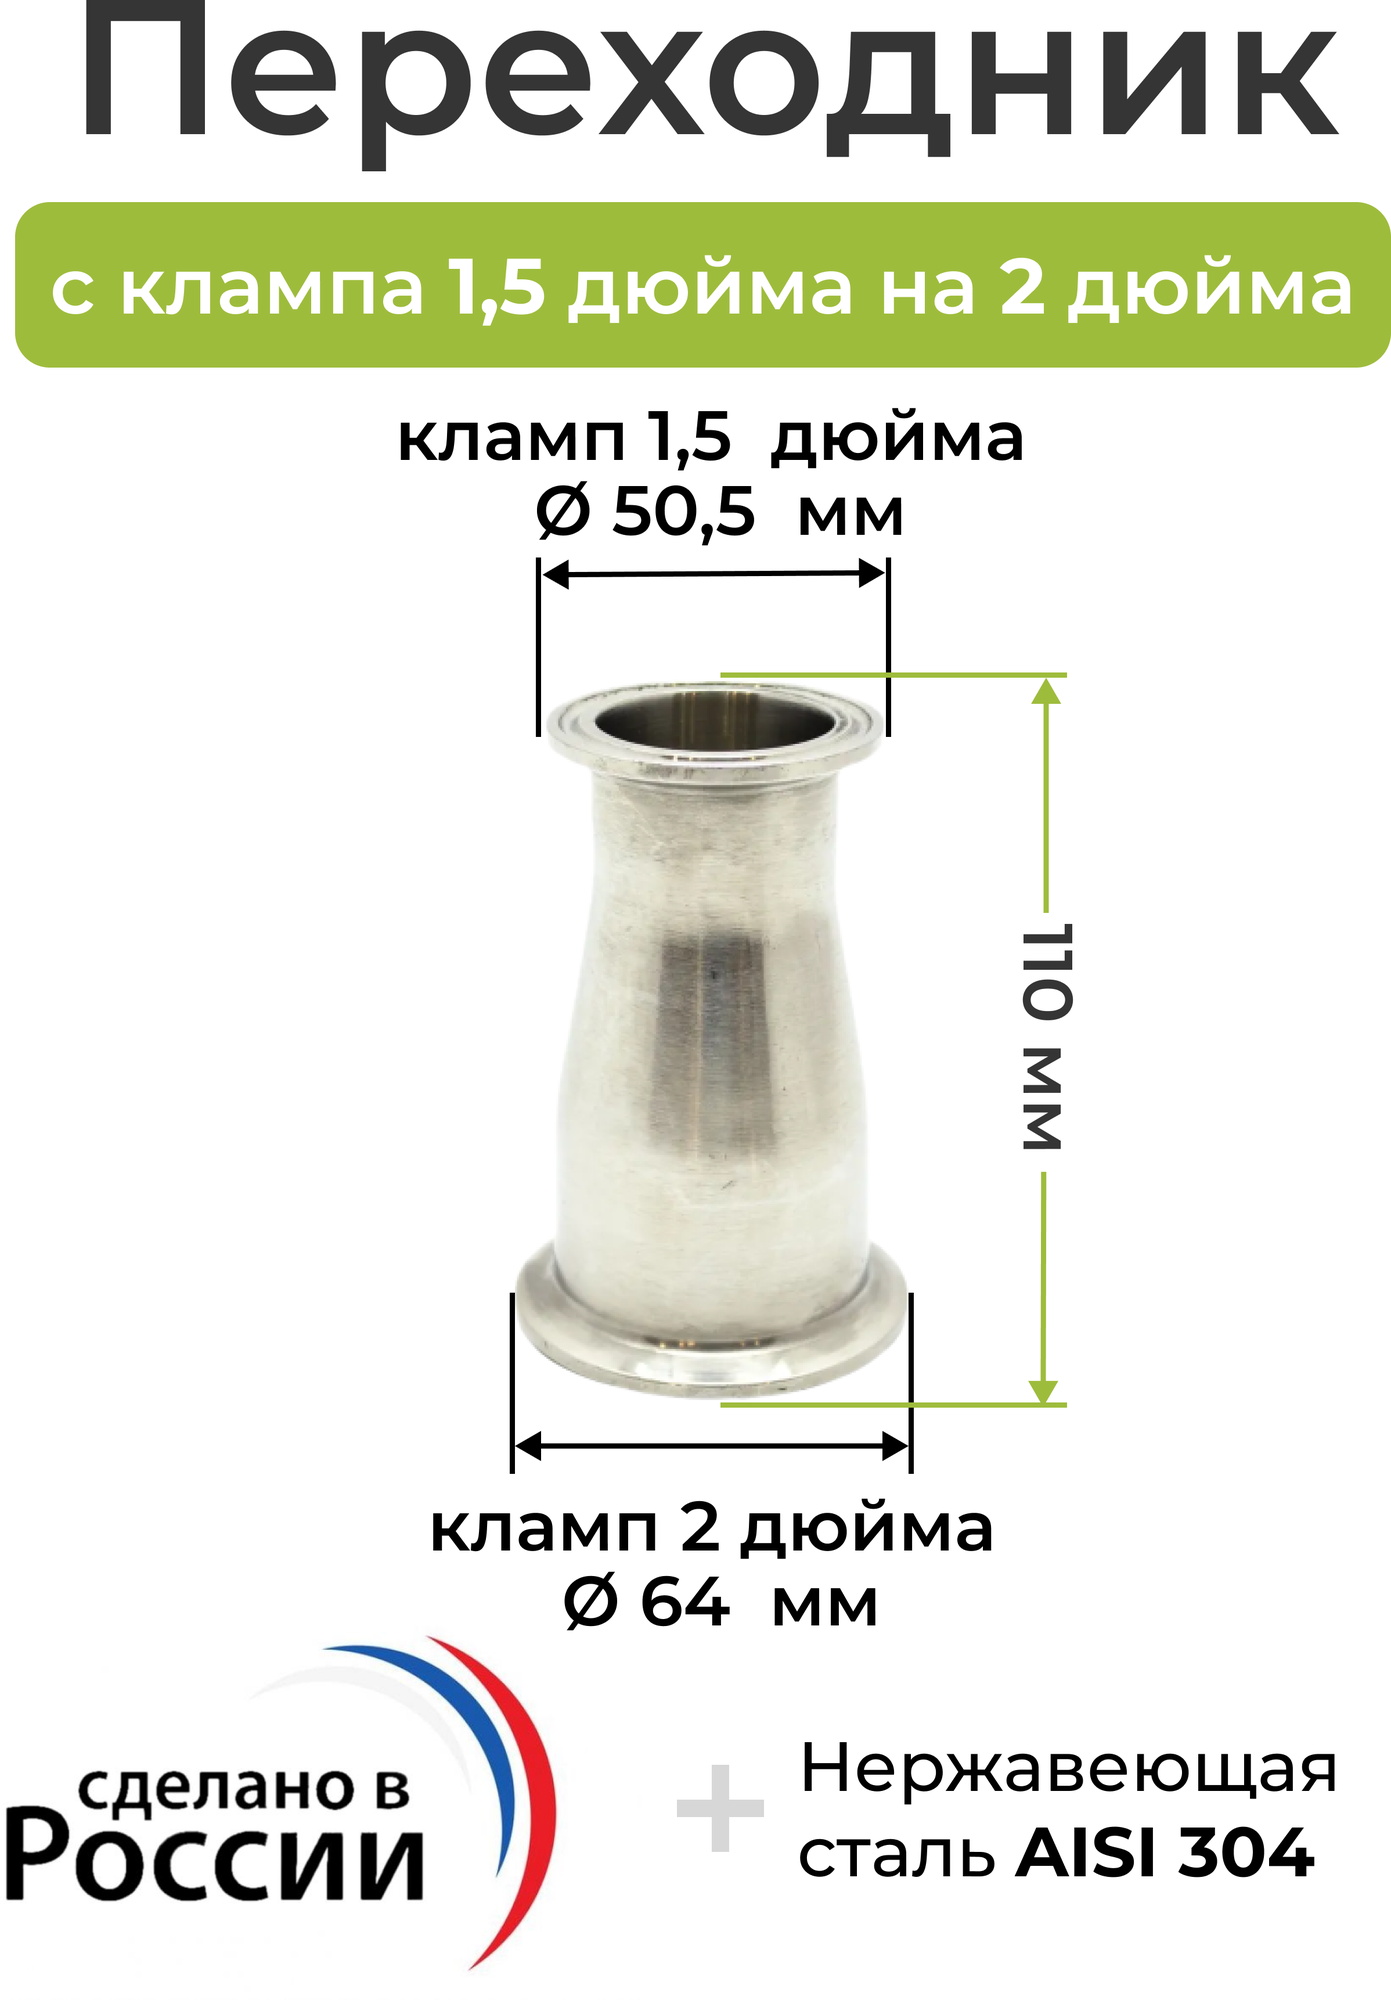 Переходник с клампа 1.5 дюйма (38,1 мм) на кламп 2 дюйма (50,8 мм)